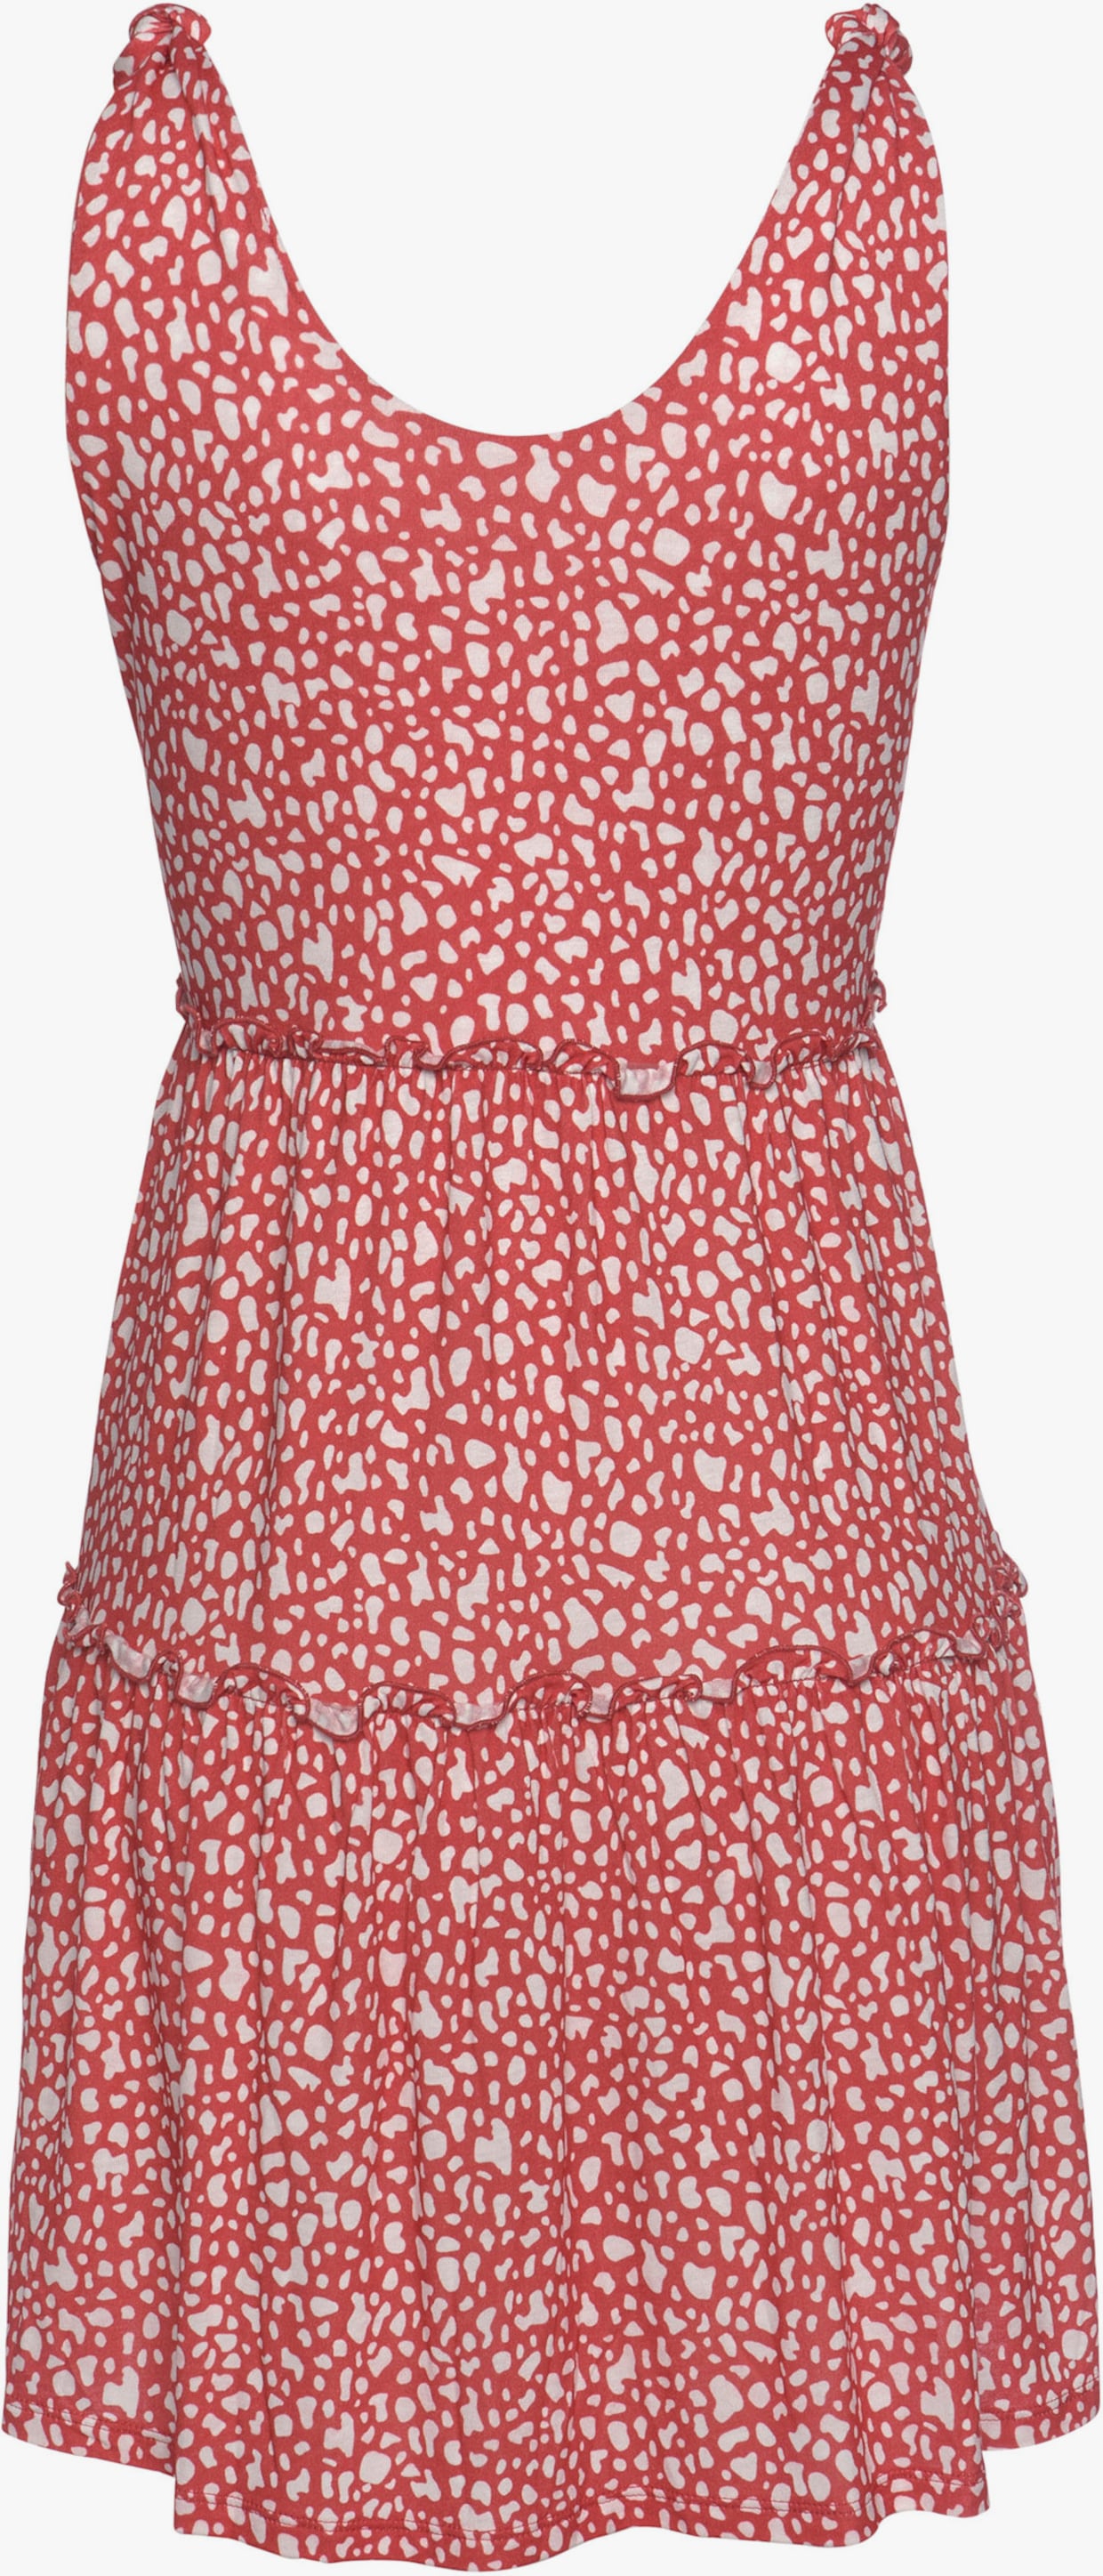 Beachtime Bedrukte jurk - rood/wit geprint